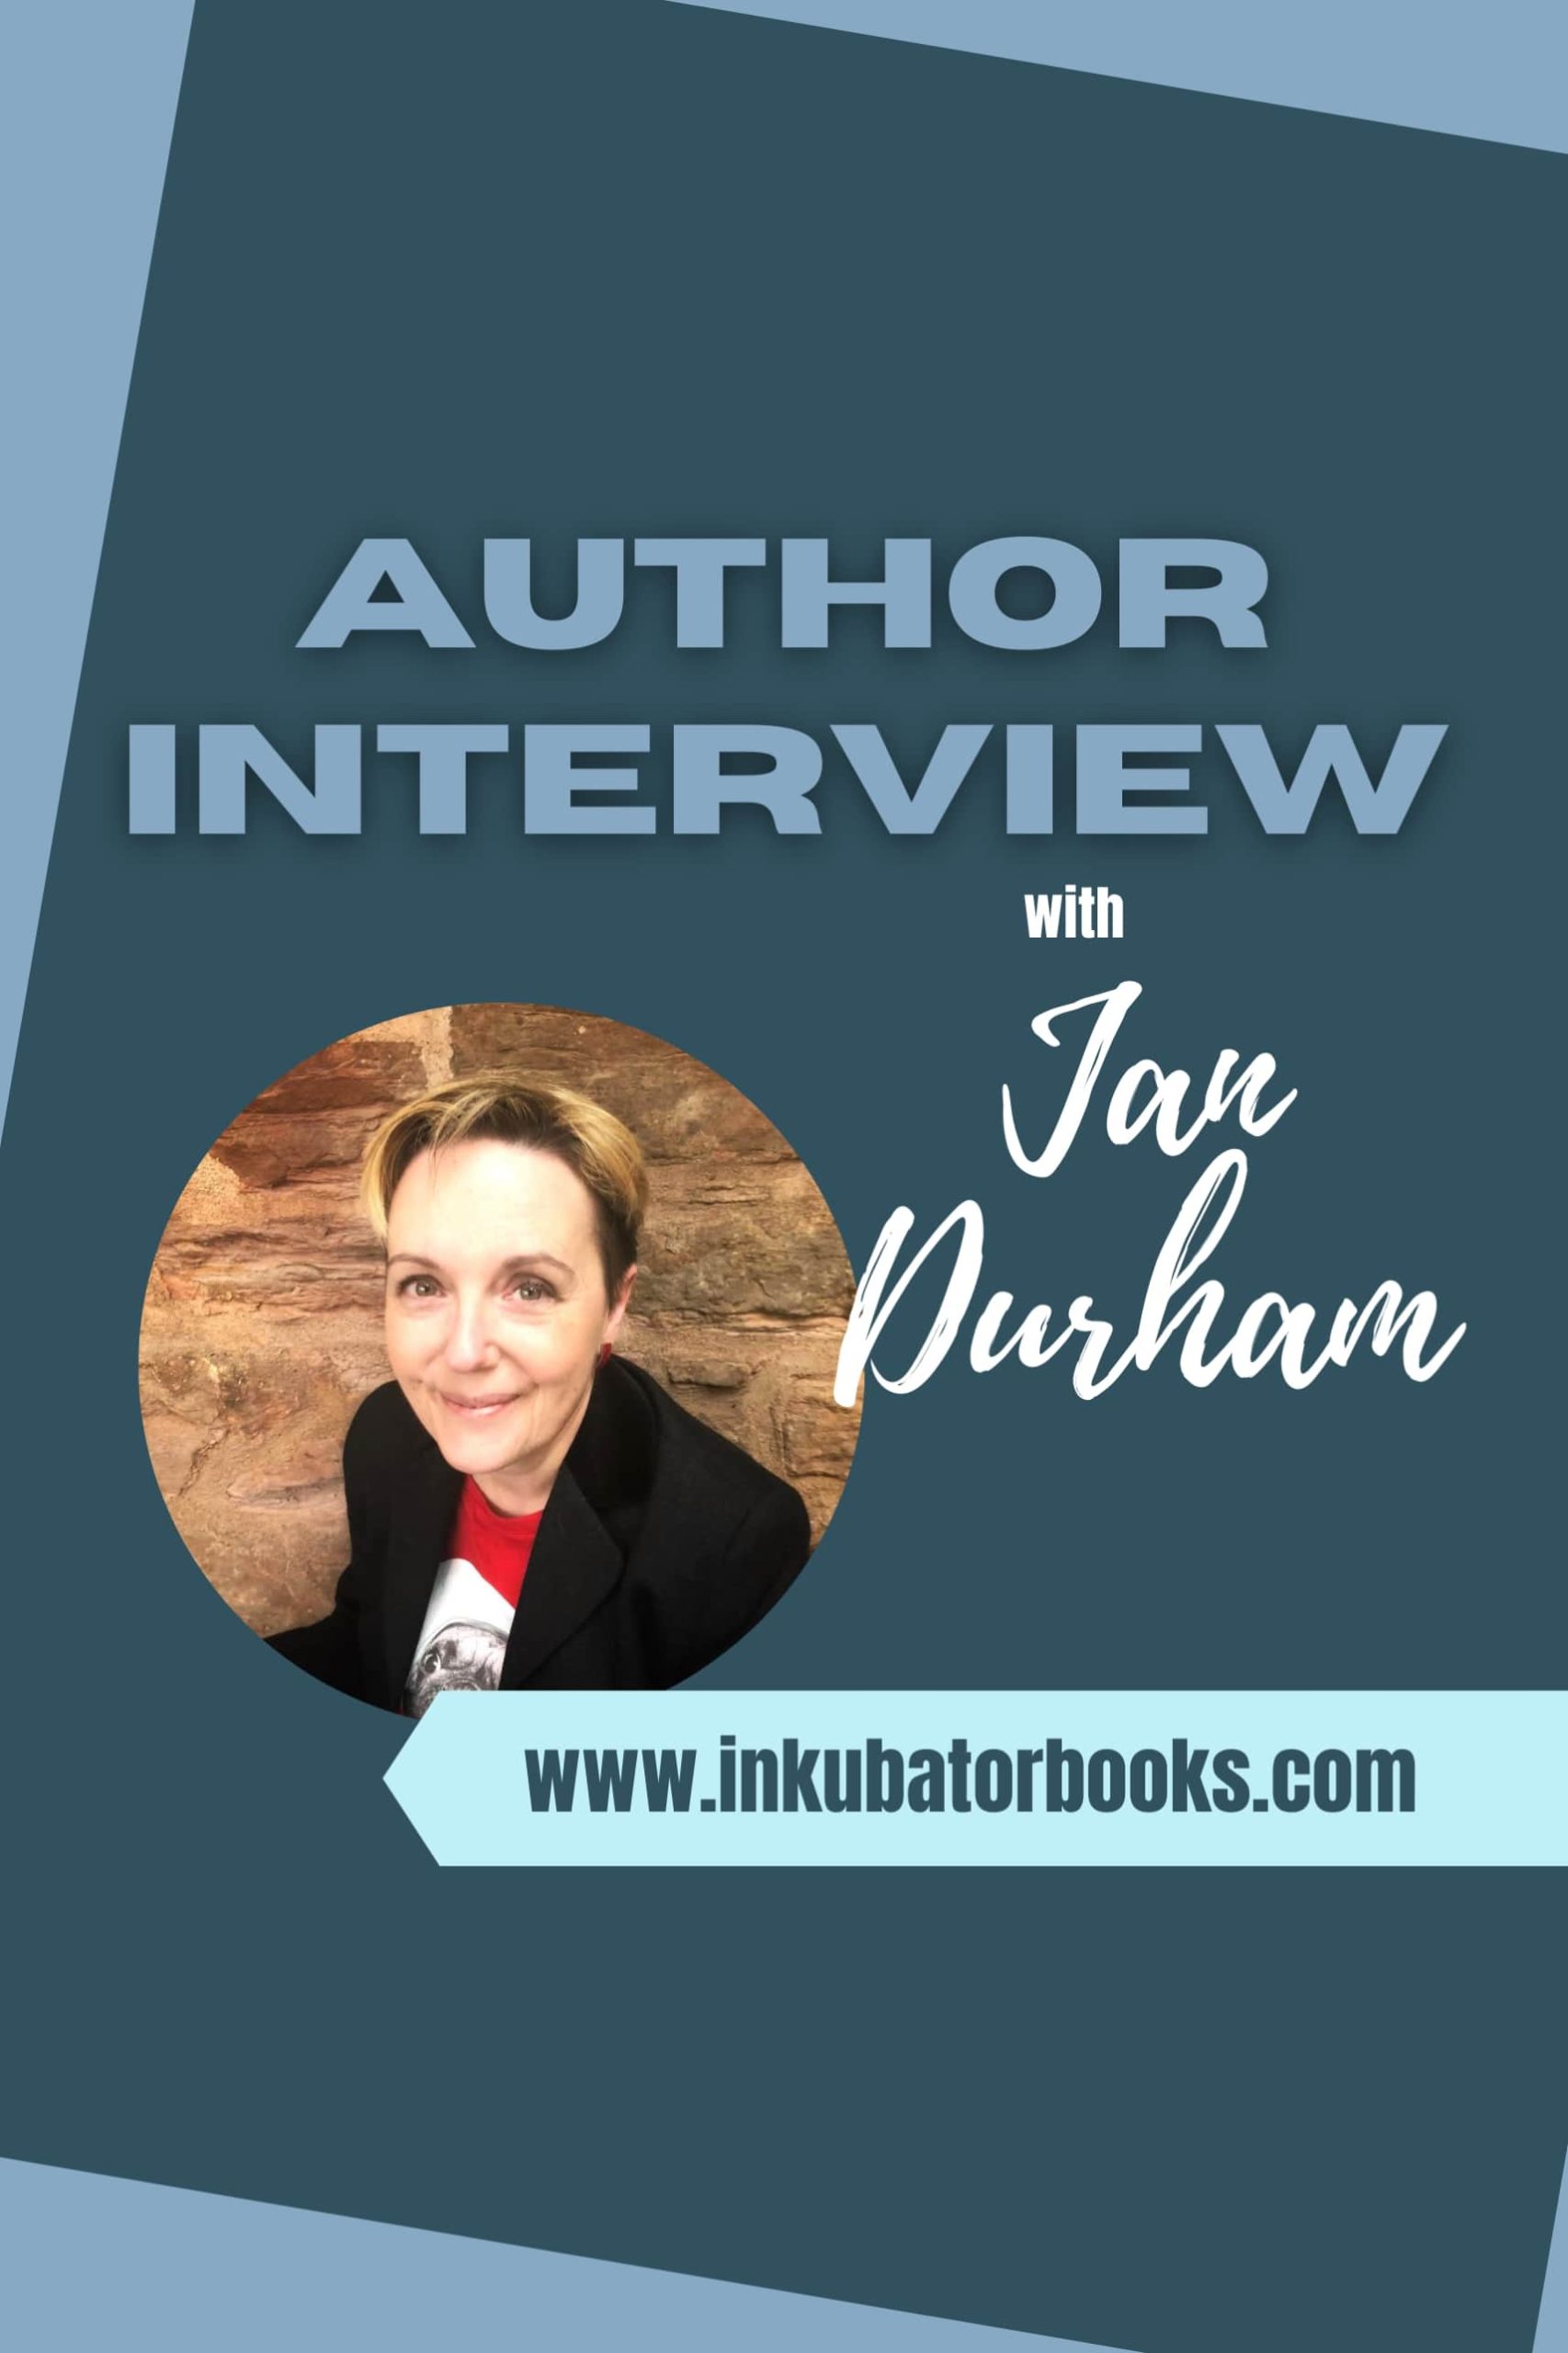 INKUBATOR AUTHOR INTERVIEW – JAN DURHAM